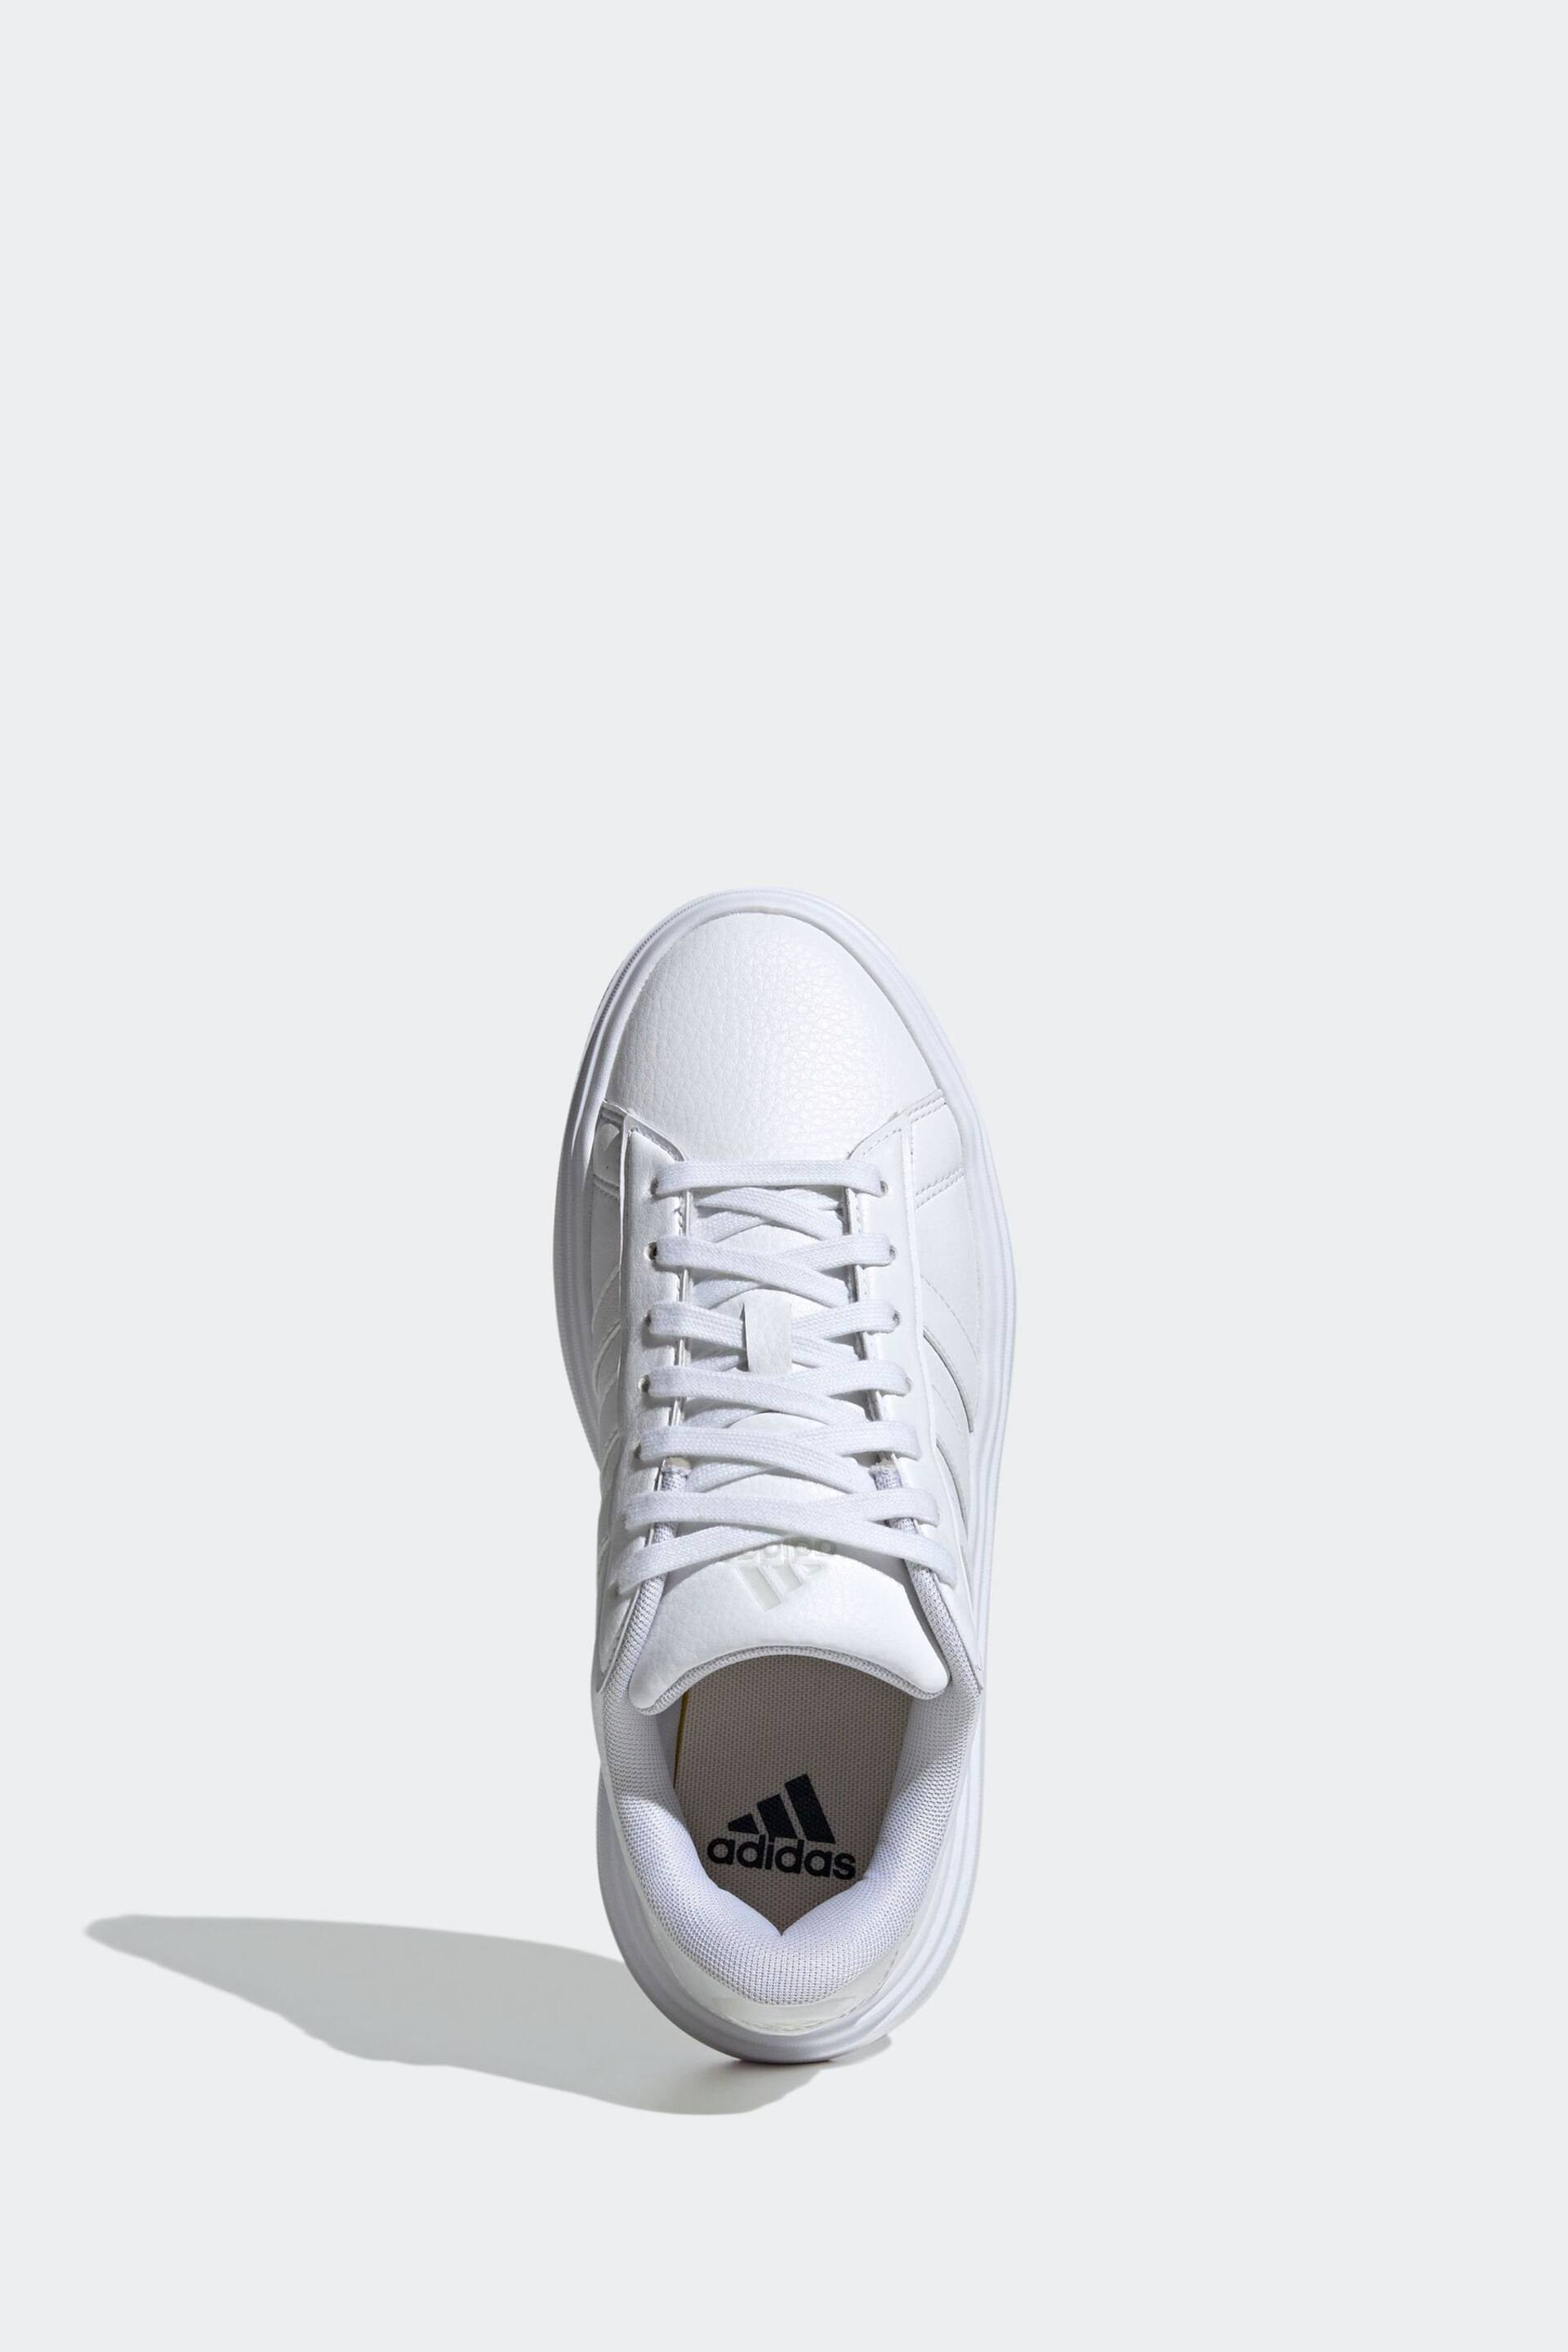 adidas White Grand Court Platform Trainers - Image 6 of 9